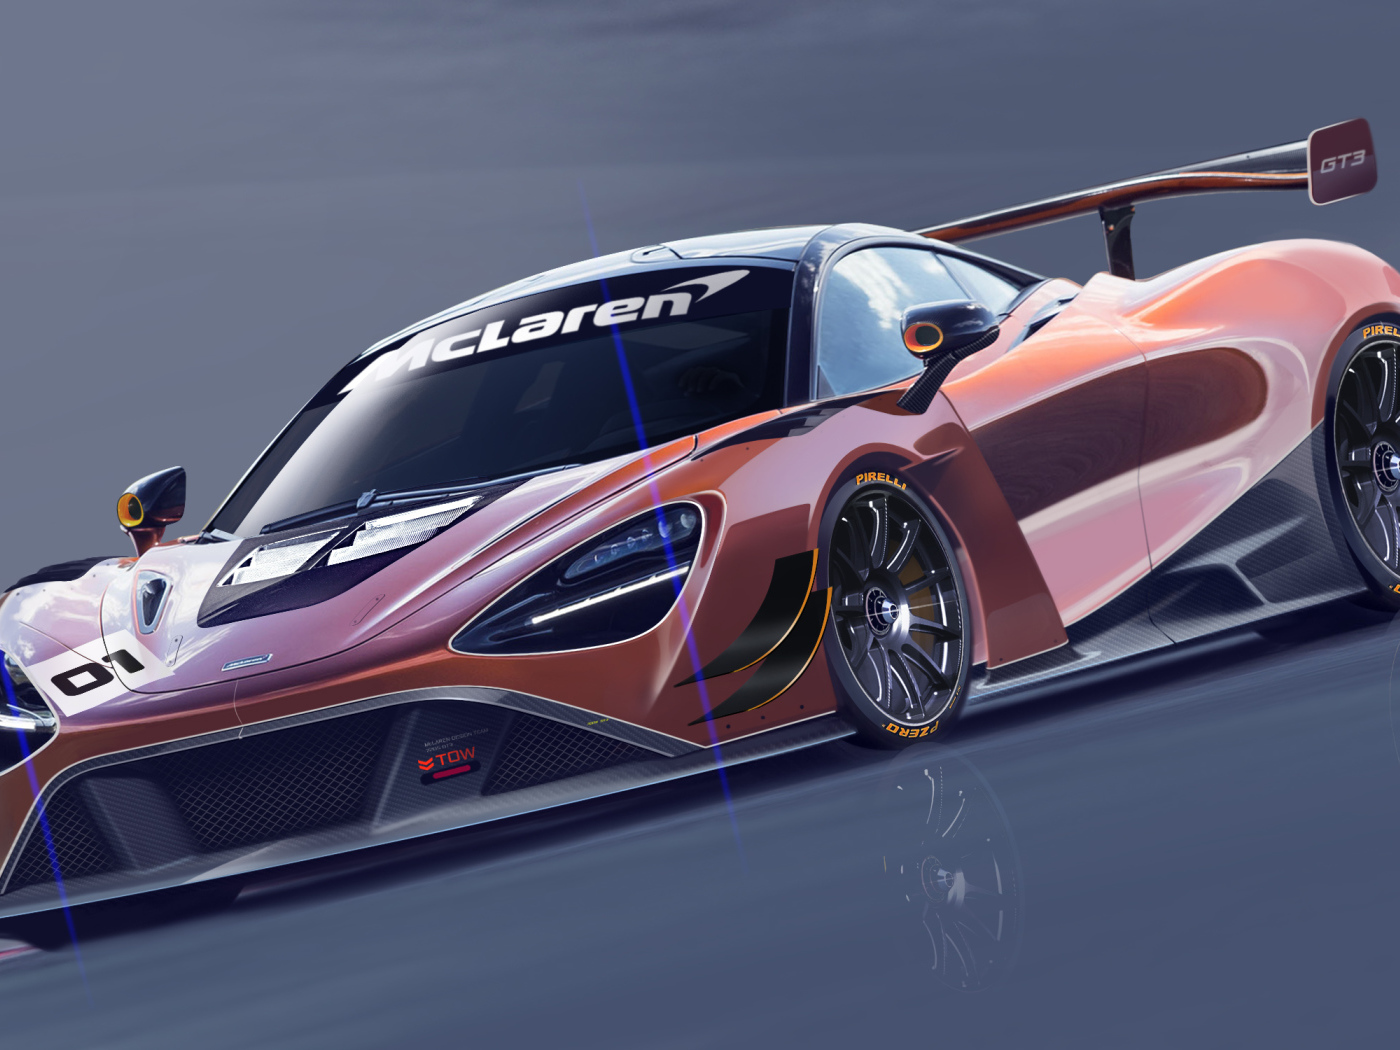 The racing car McLaren 720S GT3, 2019